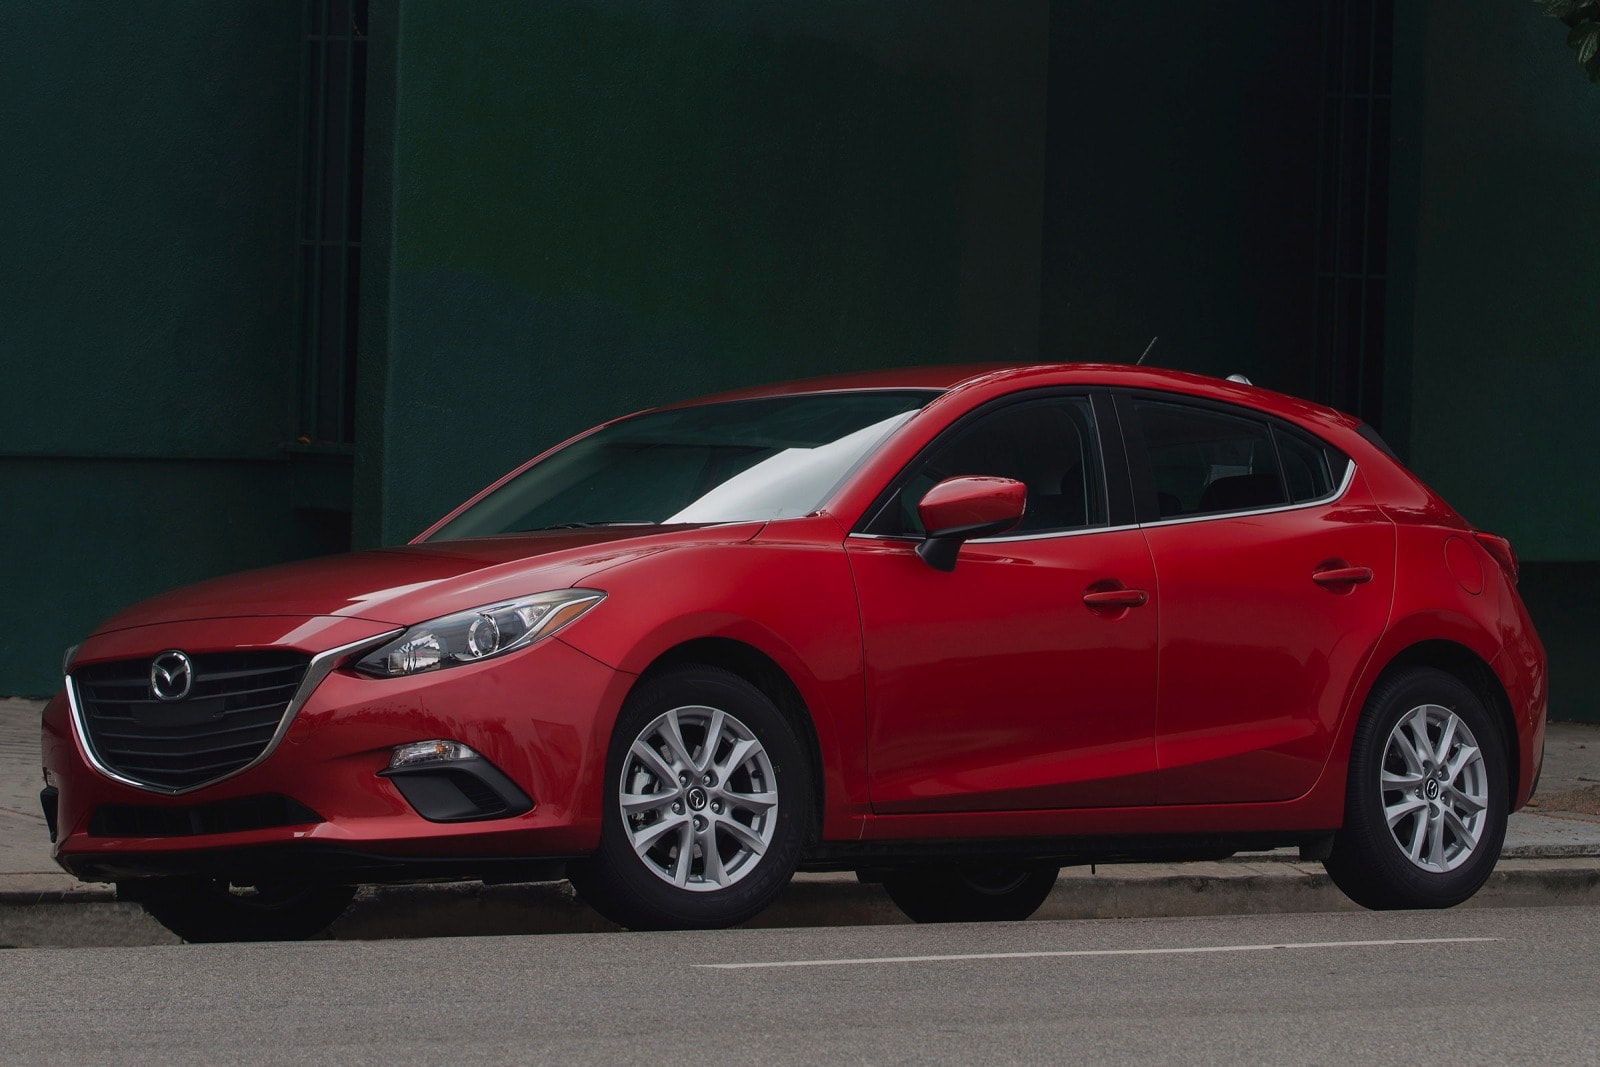 2015 Mazda 3 Review & Ratings | Edmunds